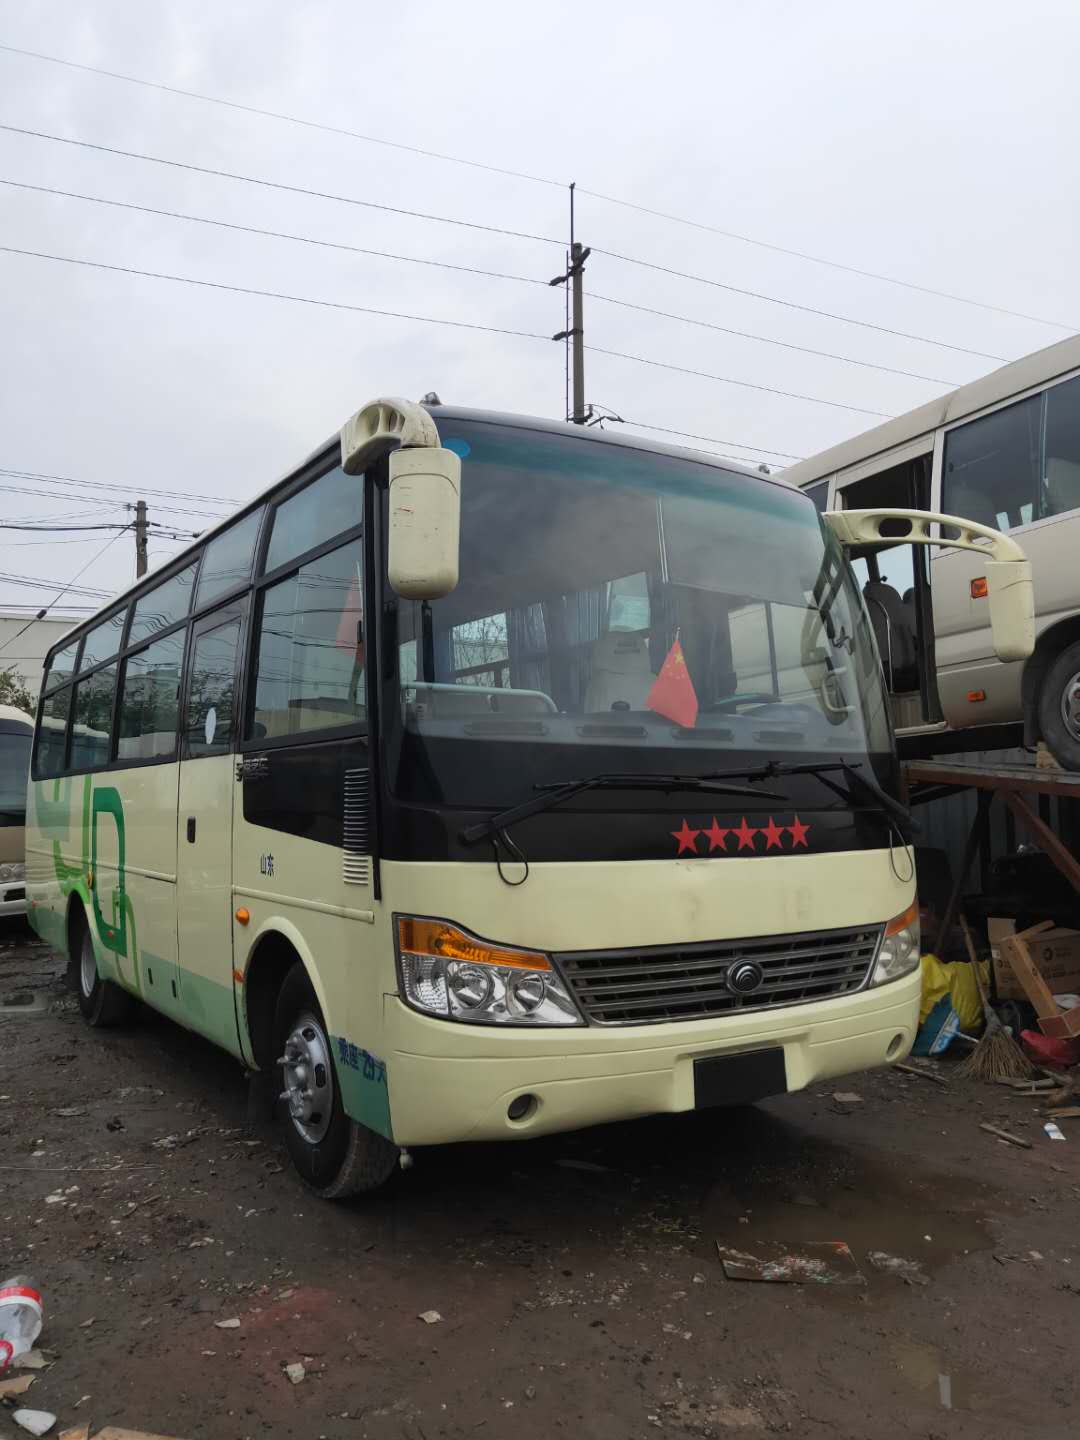 Buy cheap used yutong bus 2015 year China made yutong 29 seats/50 seats big bus for sale in China product